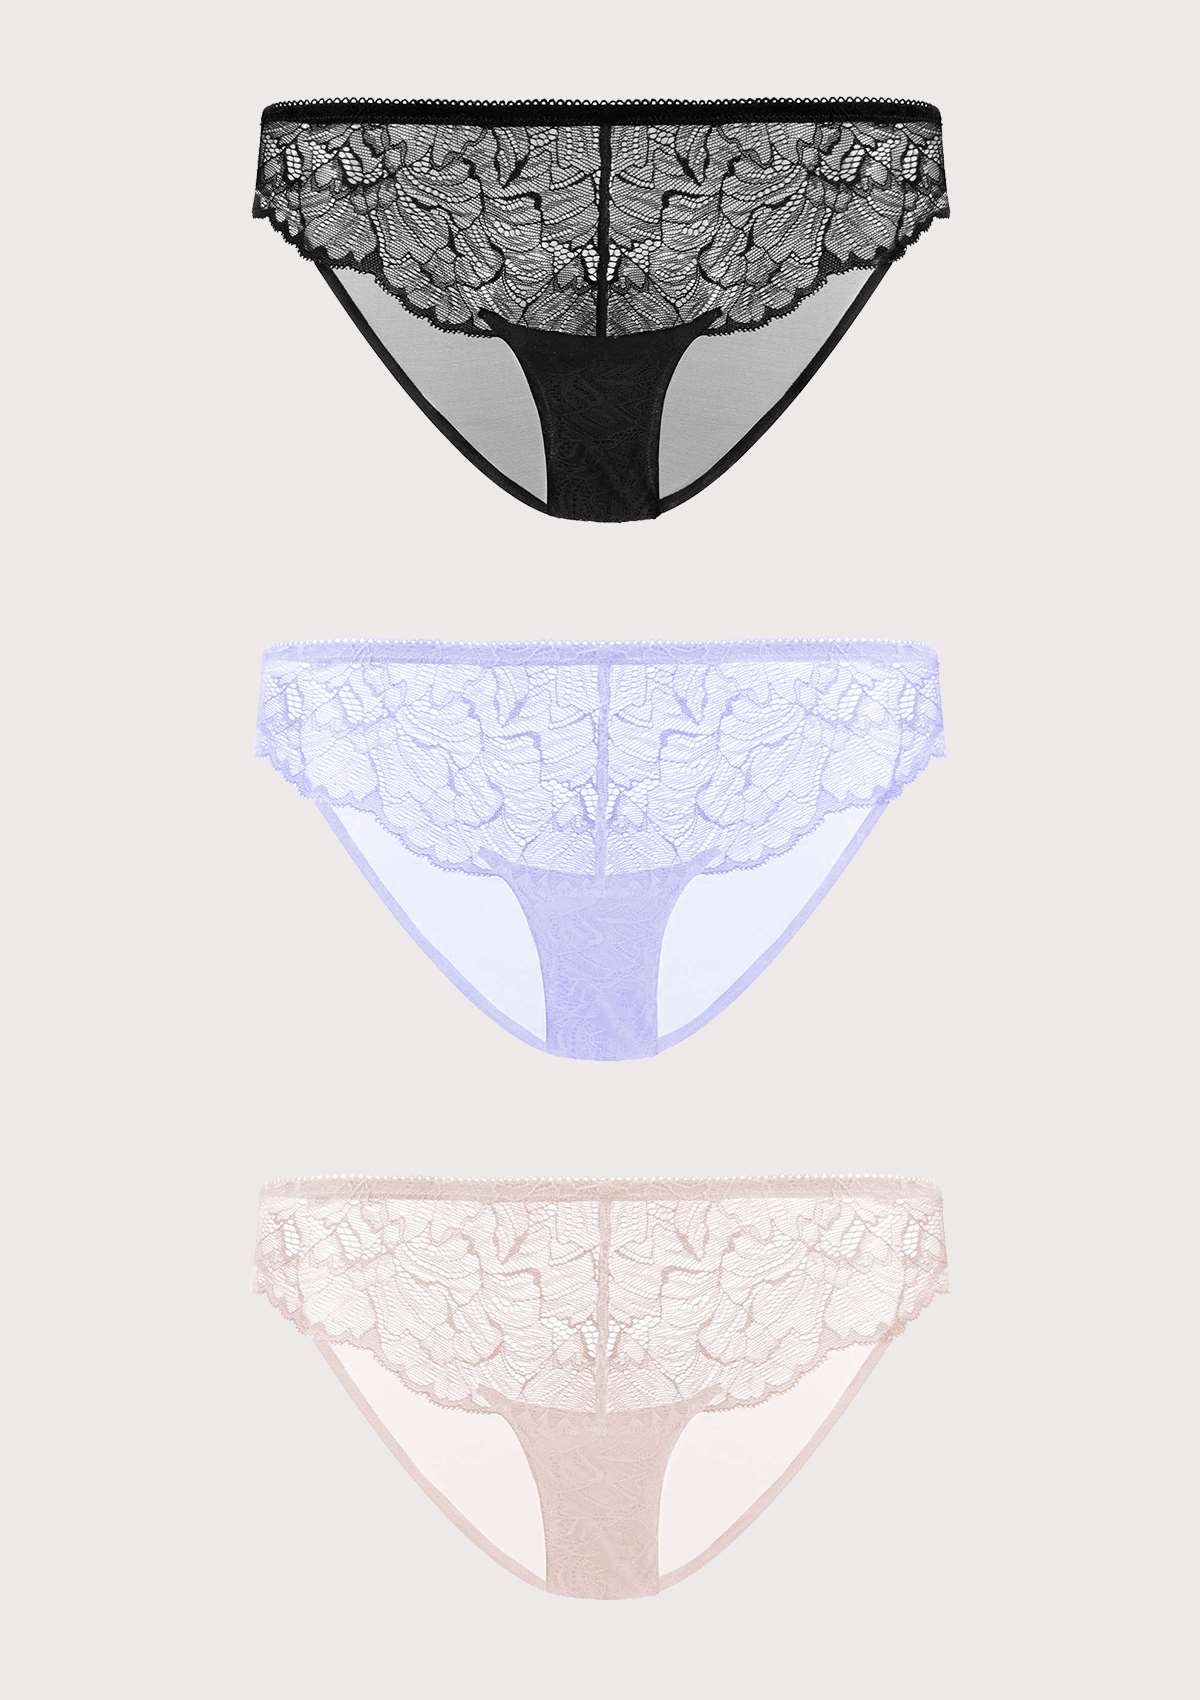 HSIA Blossom Lace Mesh Bikini Underwears 3 Pack - XL / Black+White+Dusty Peach